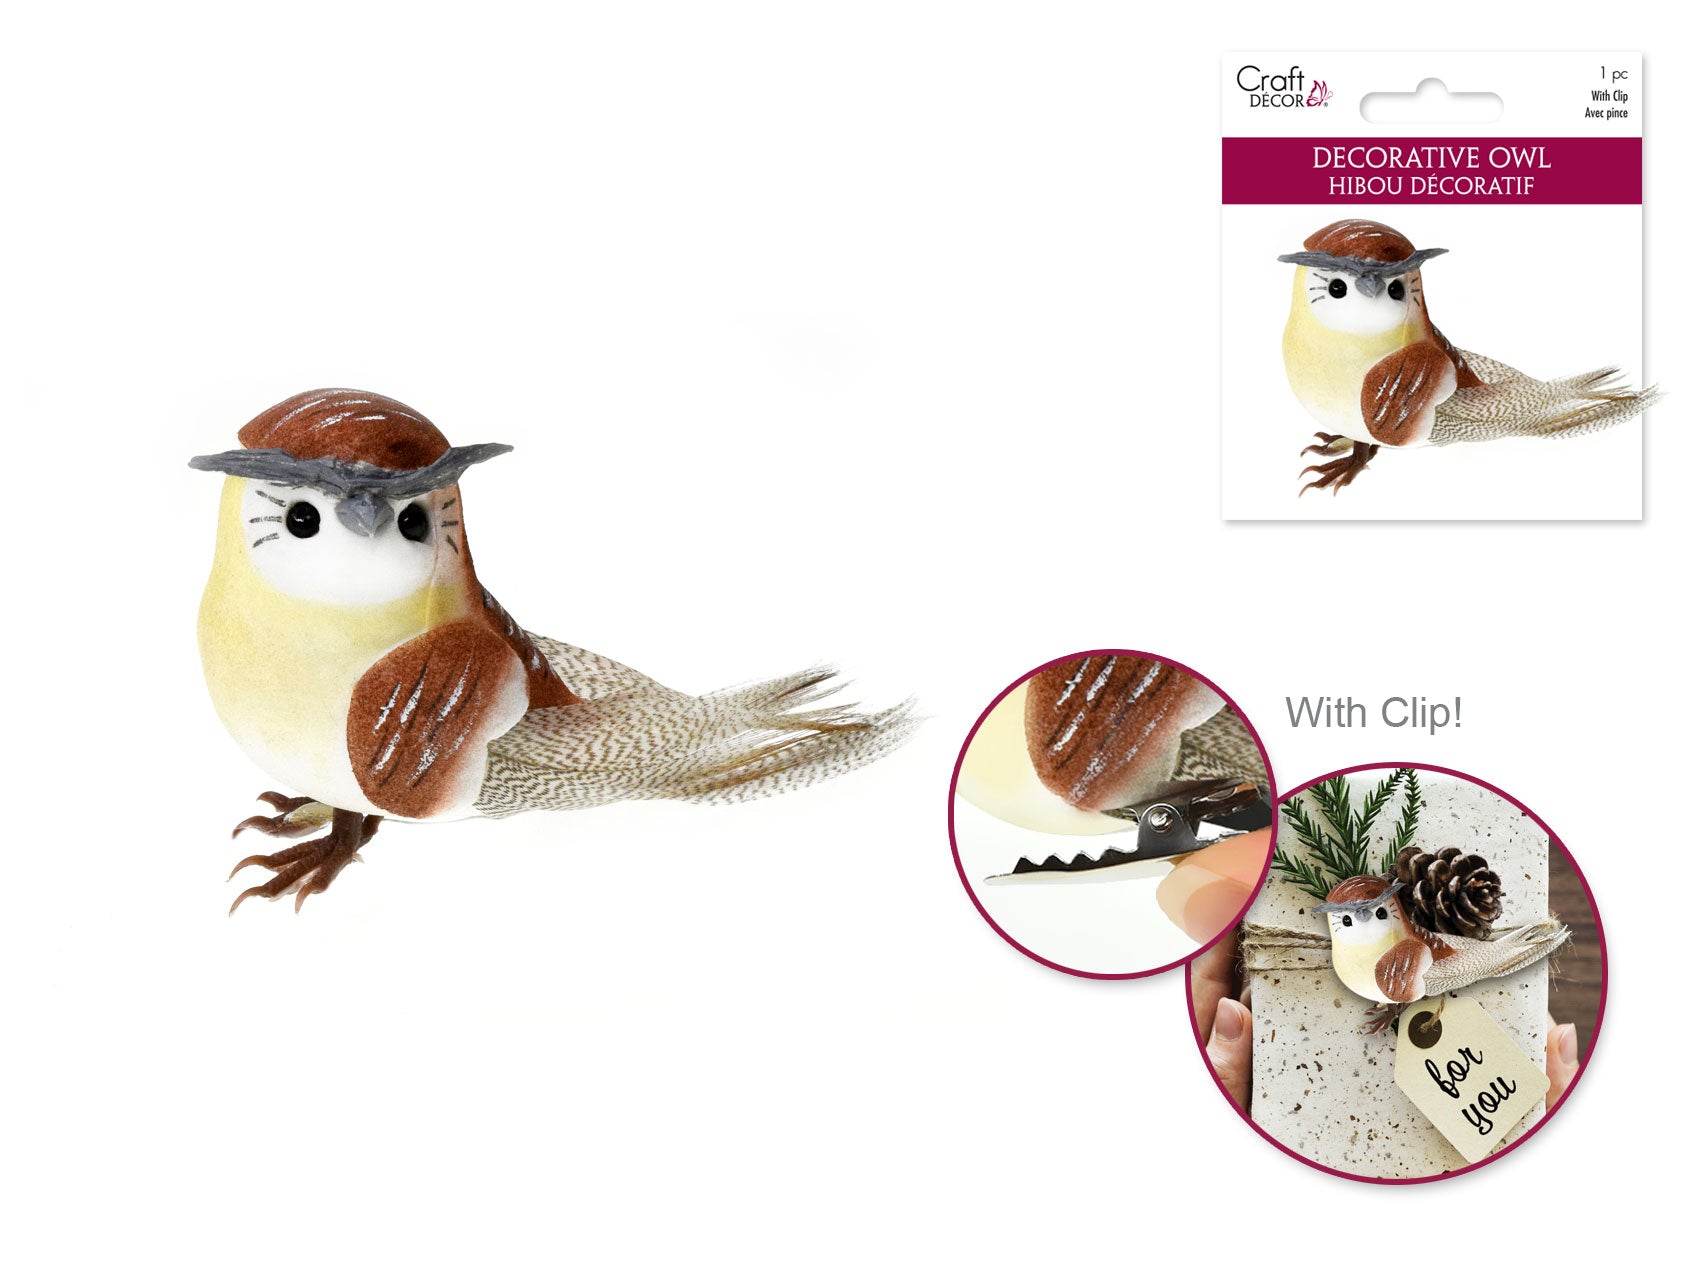 Craft Decor: Decorative Owl with Clip, Dimensions 9cmx3.2cm